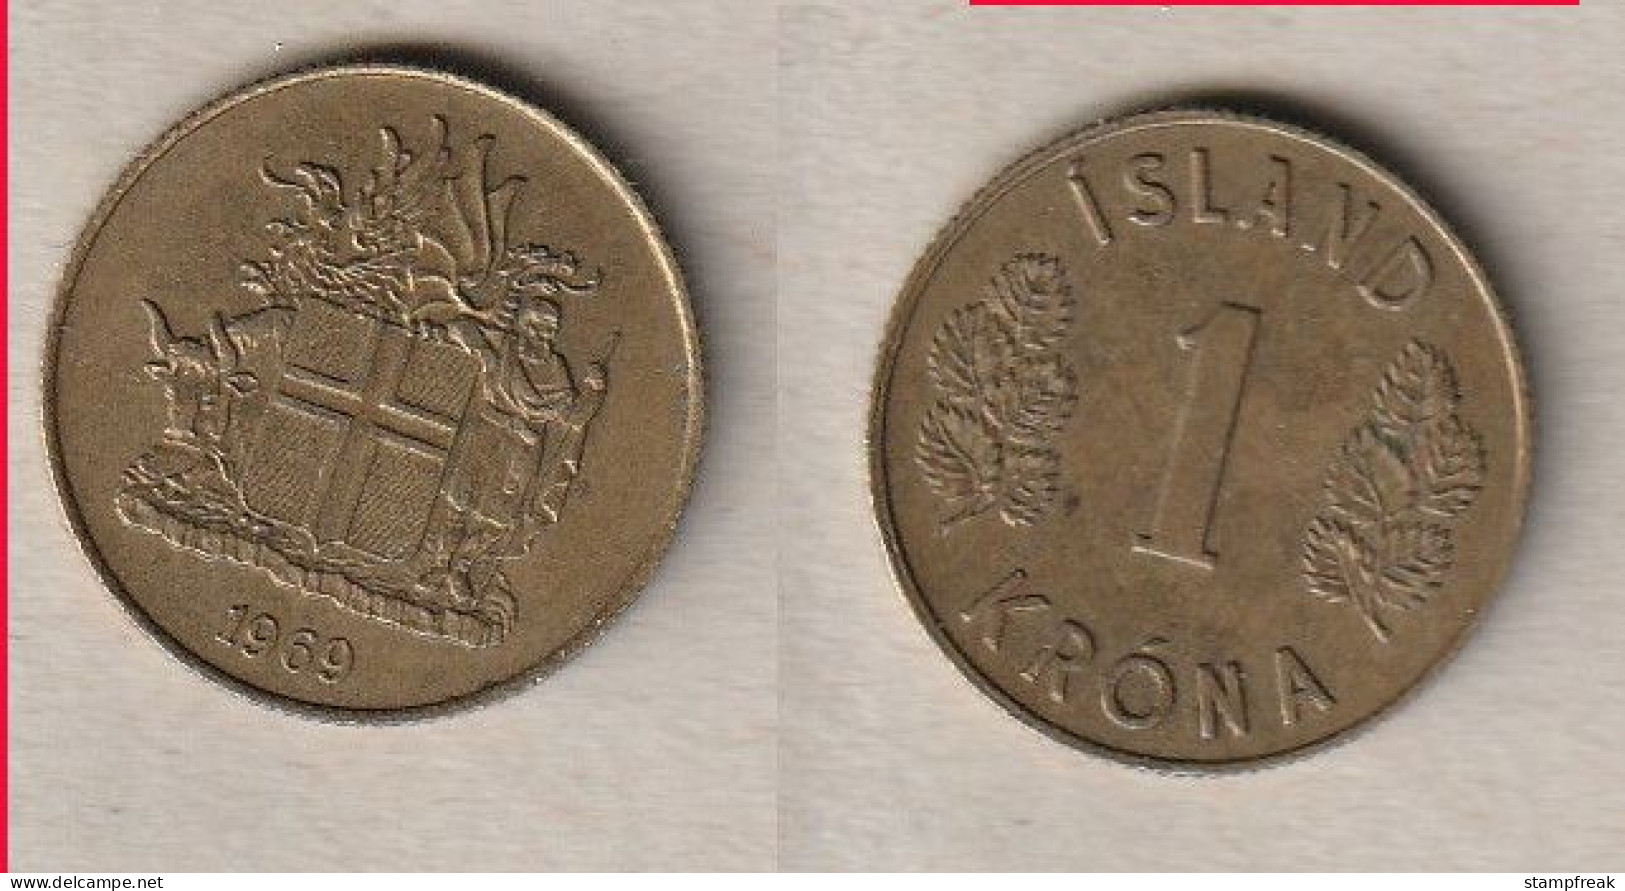 00147) Island, 1 Krone 1969 - Iceland